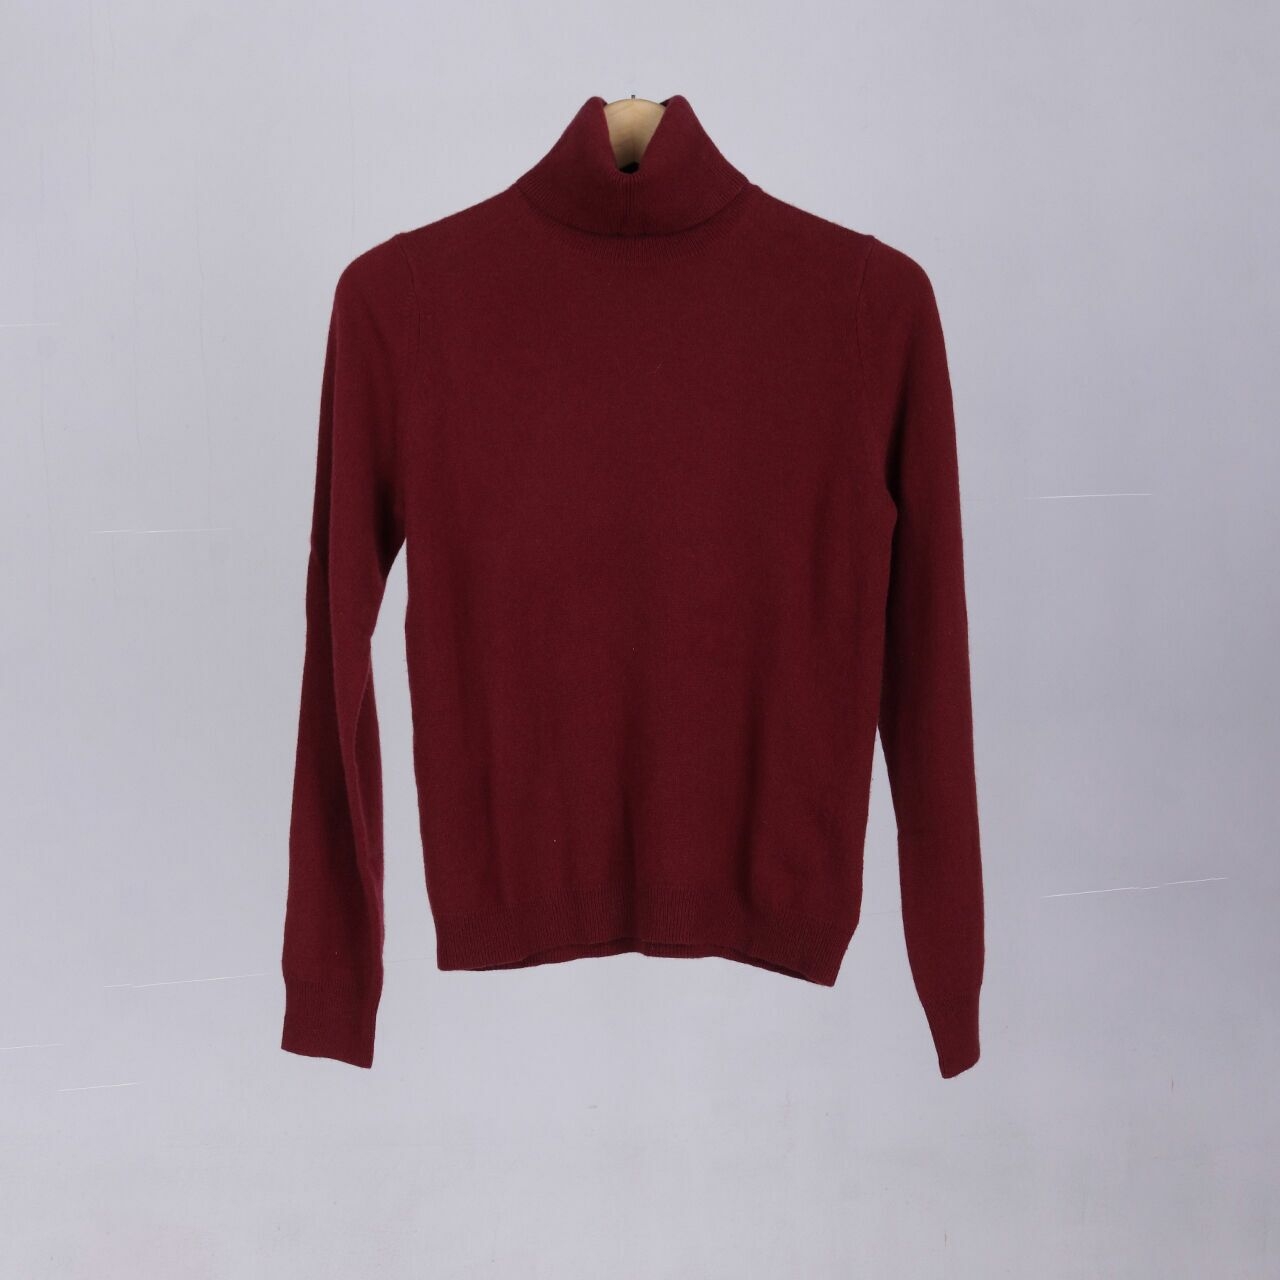 UNIQLO Maroon Sweater